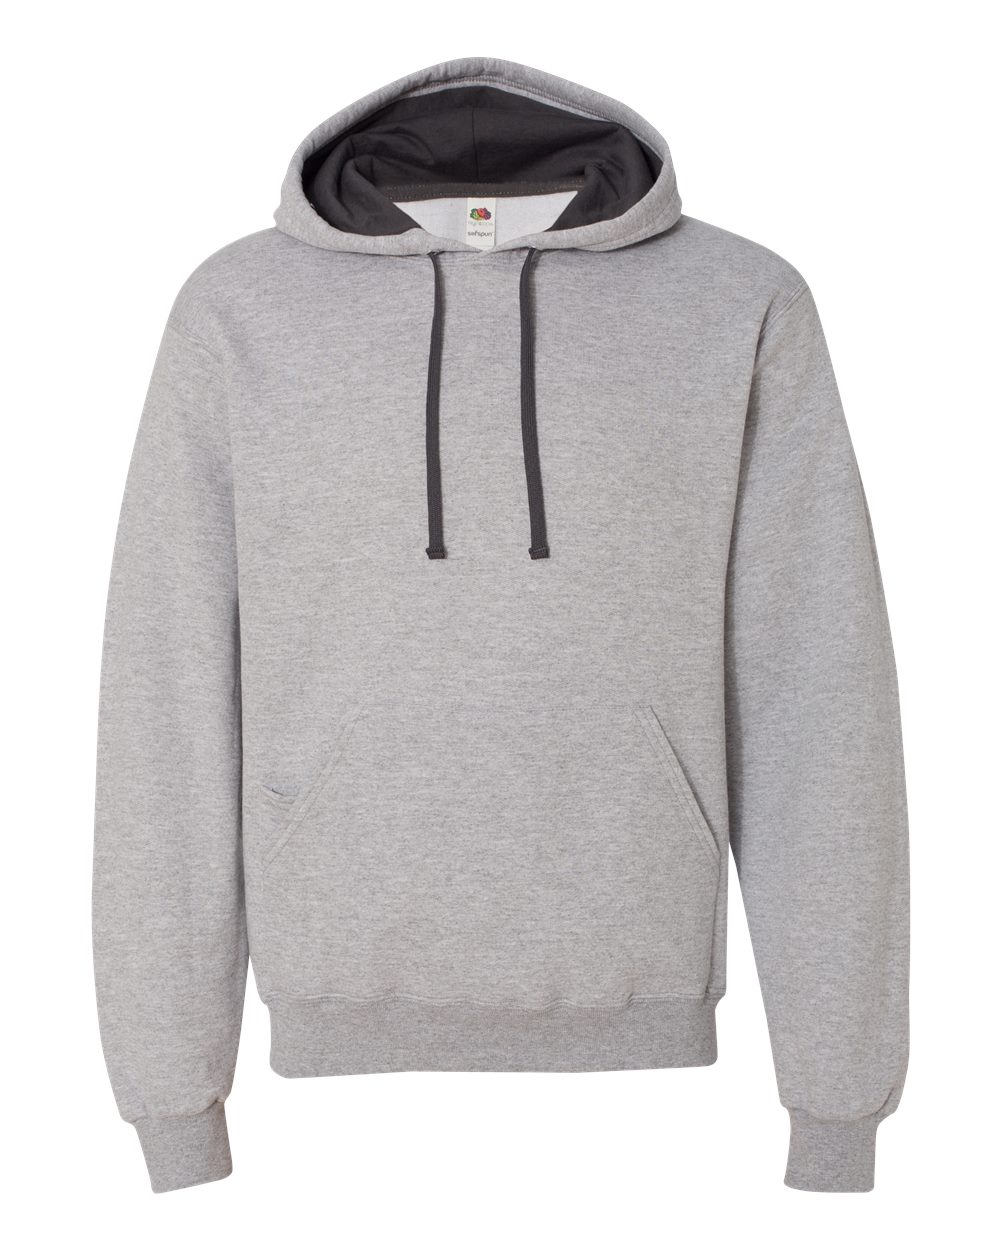 Sofspun Hooded Pullover Sweatshirt - Grey